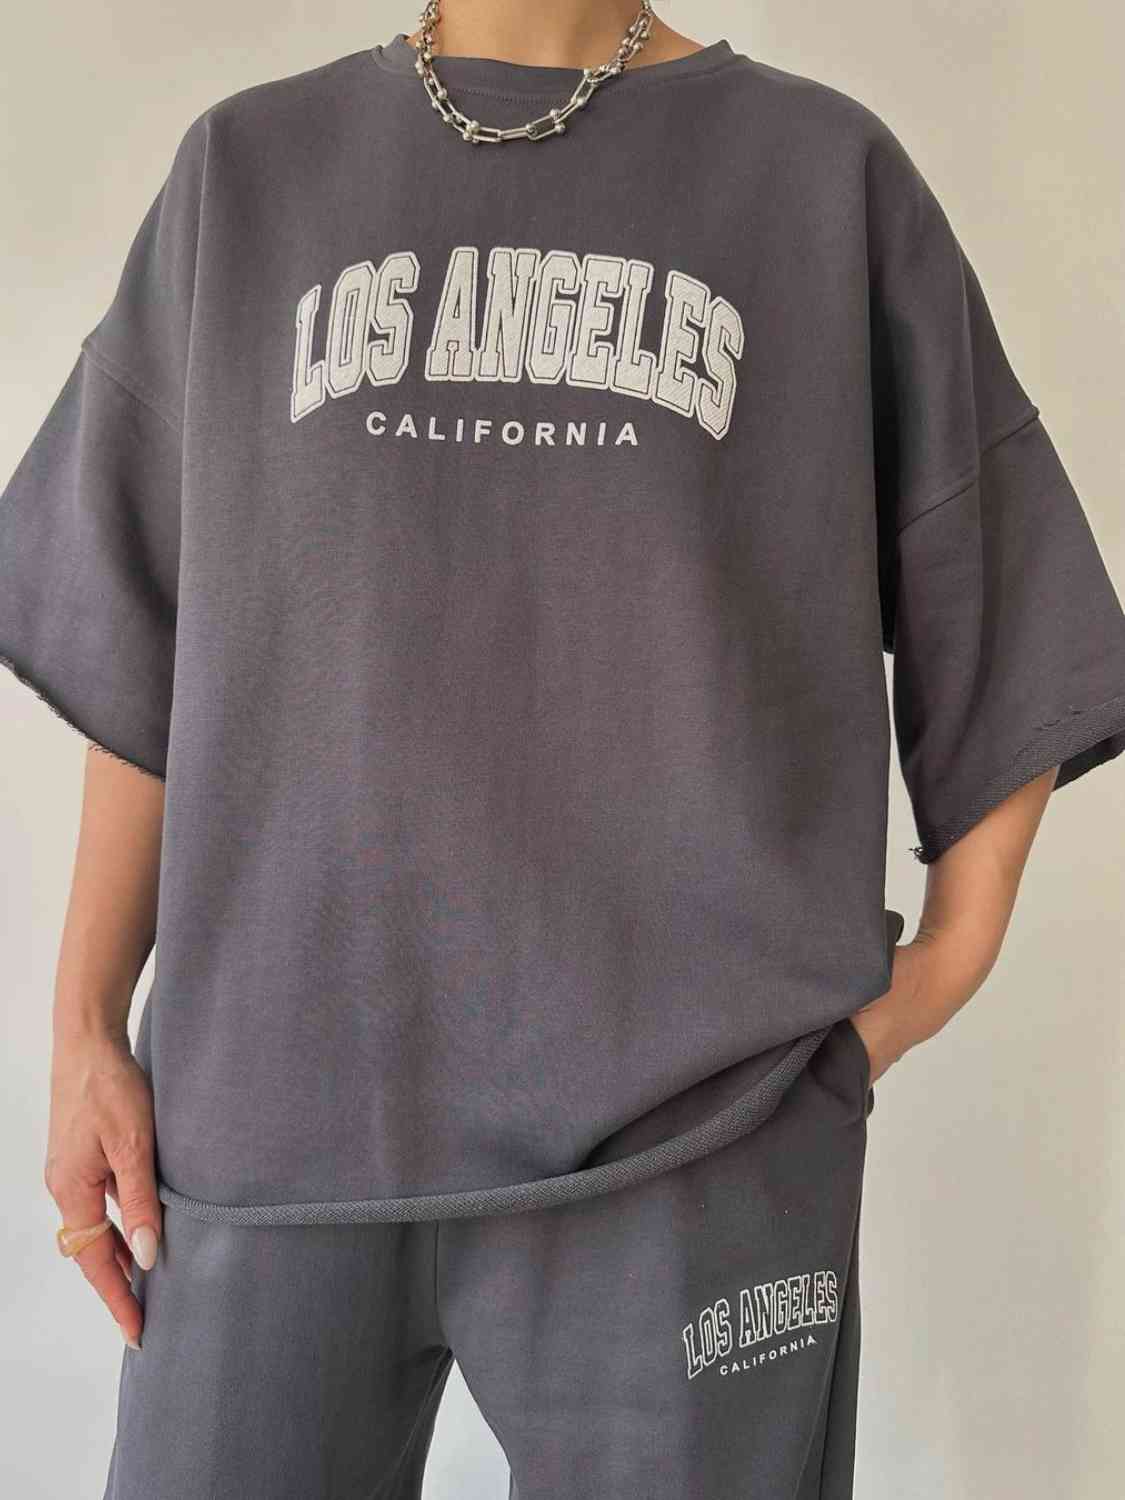 5 La California Sweatshirt Outfit